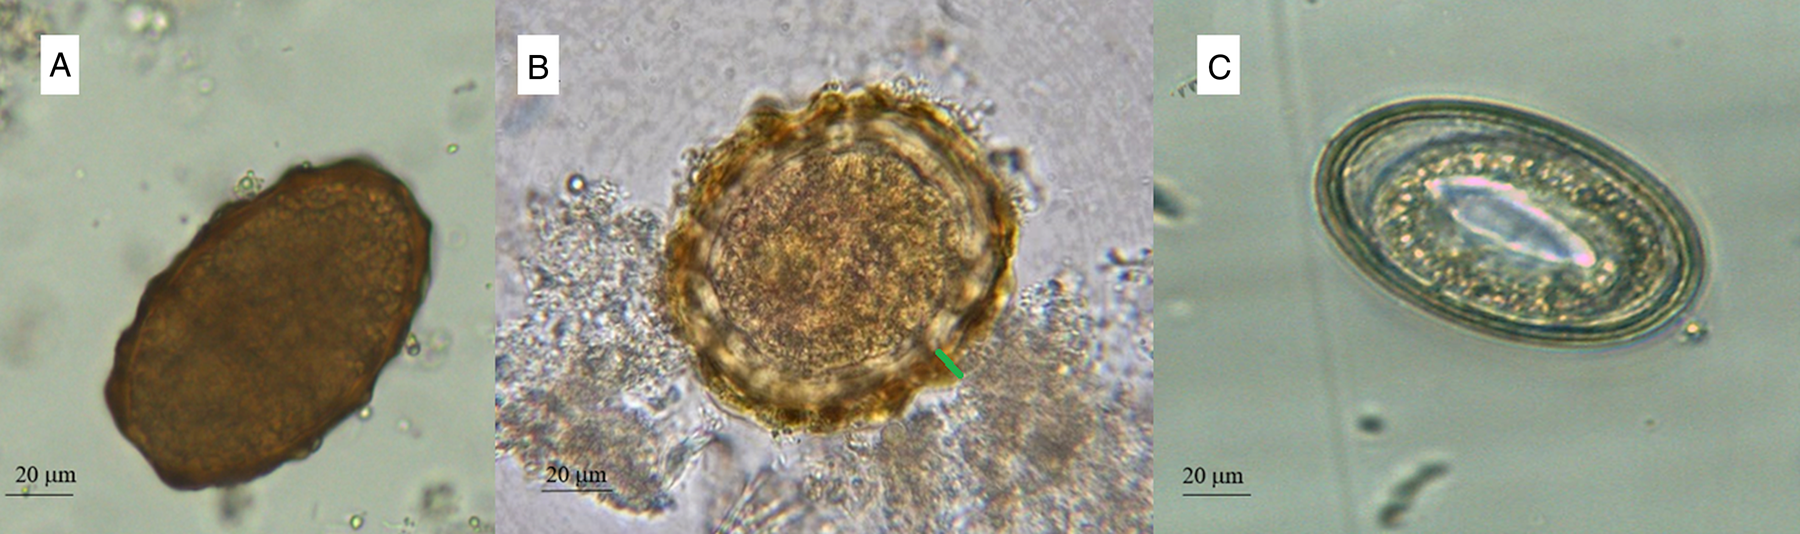 ascaris lumbricoides fertilized egg